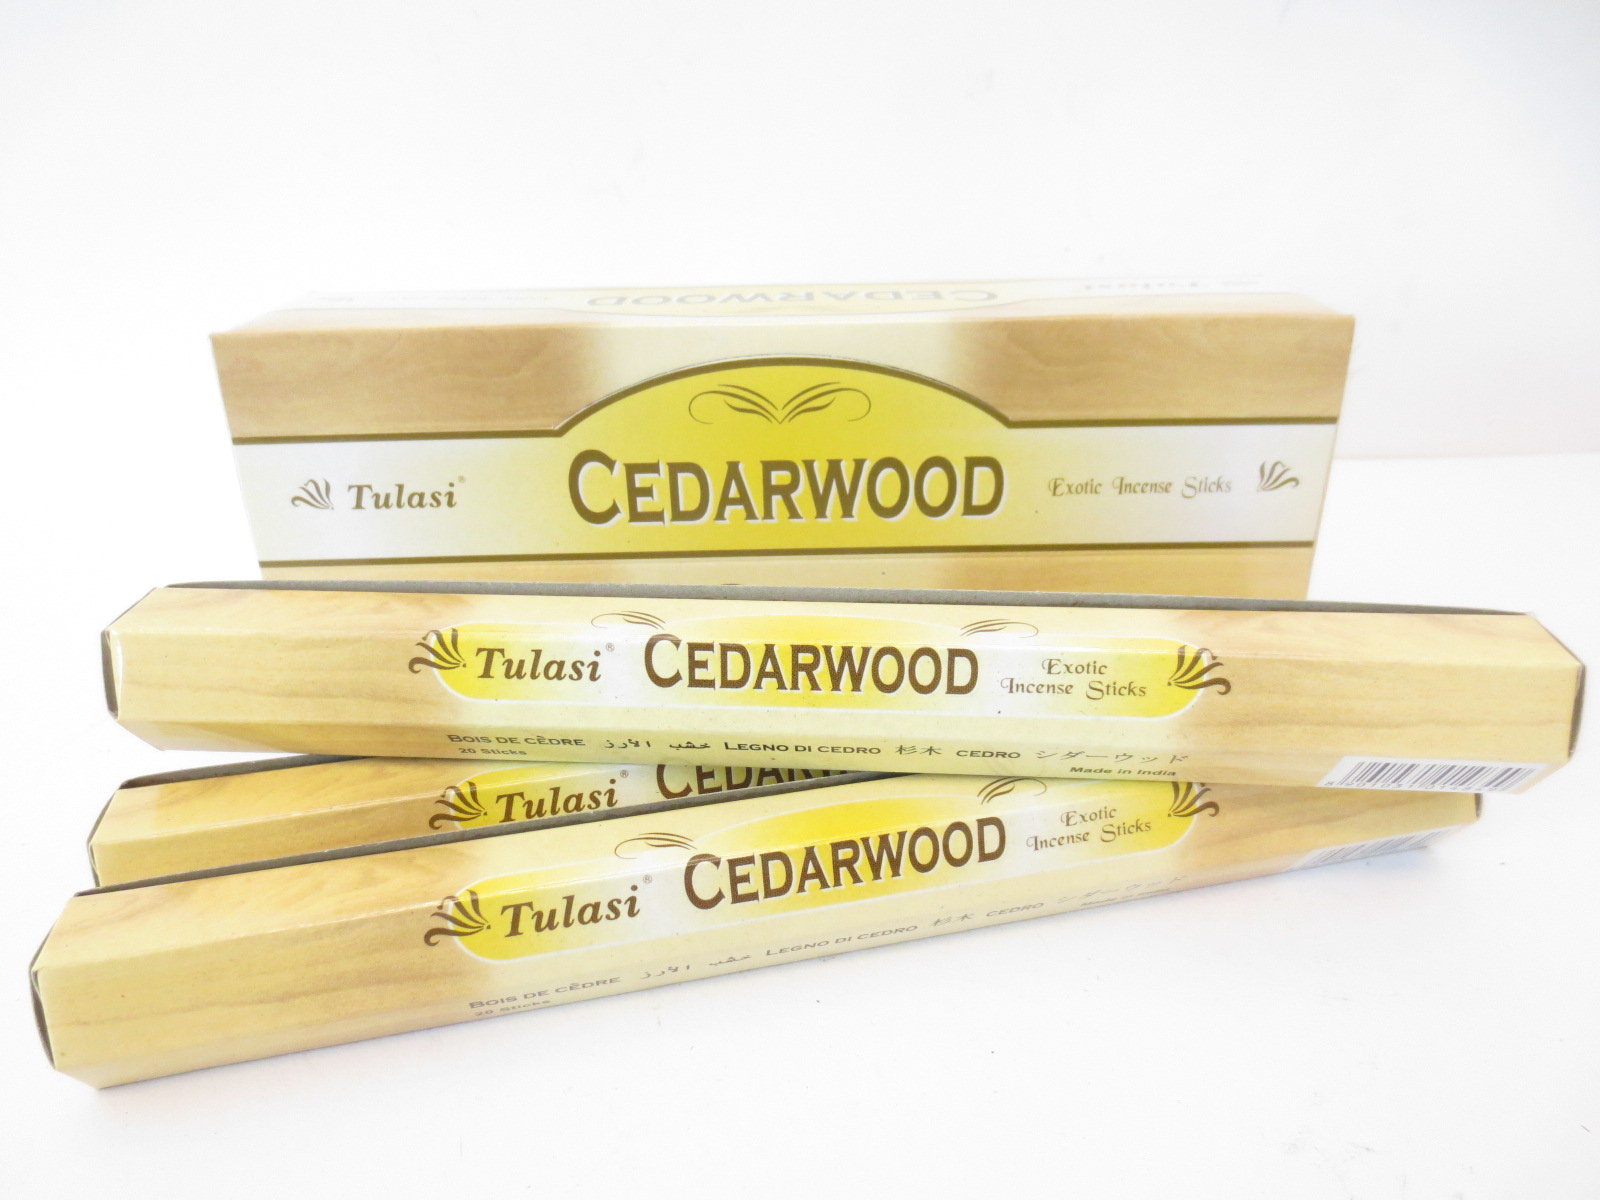 Cedarwood (Tulasi)